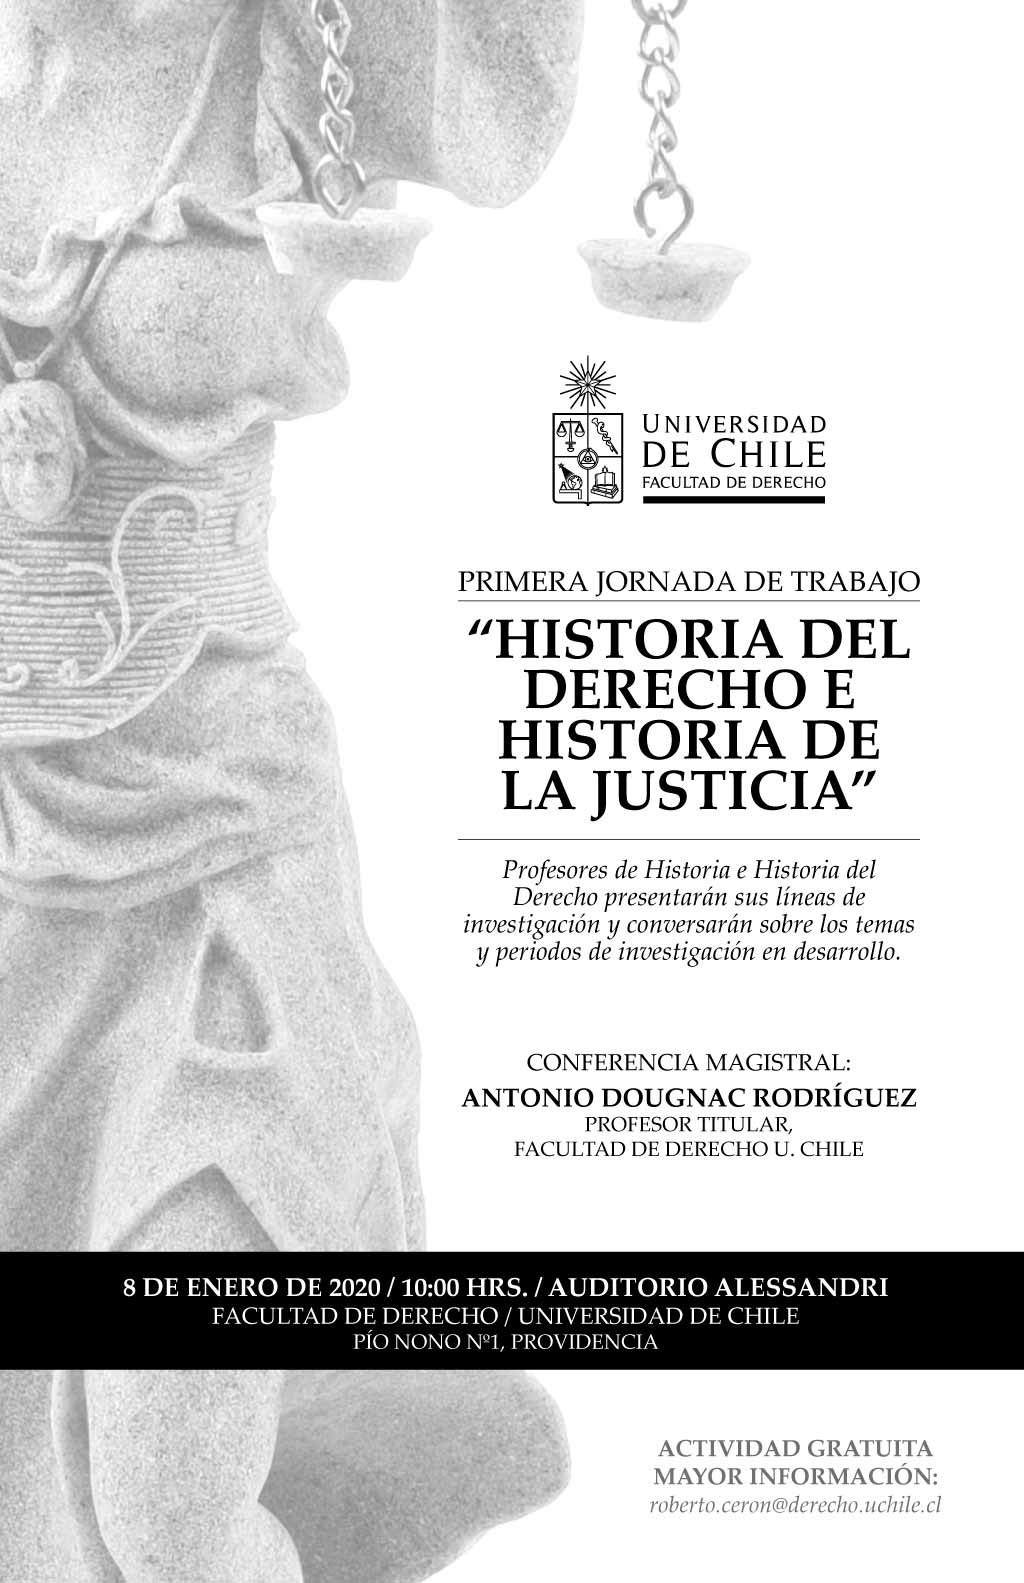 Primera Jornada de Trabajo "Historia del Derecho e historia de la justicia"